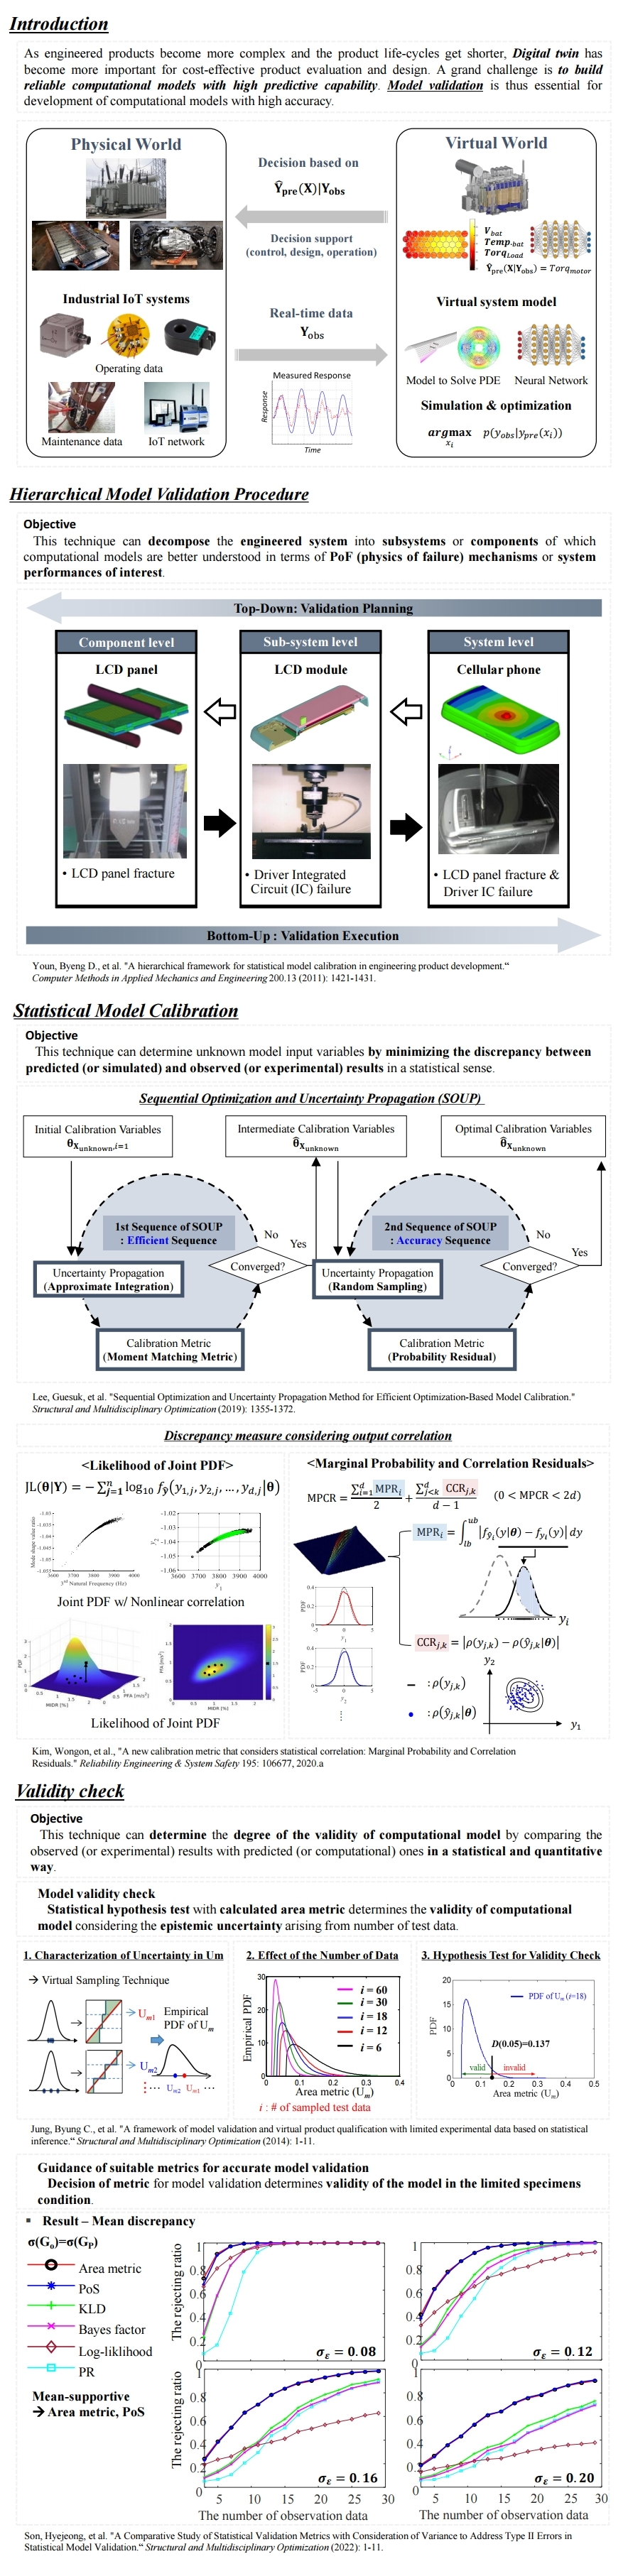 Statistical Model Verification & Validation